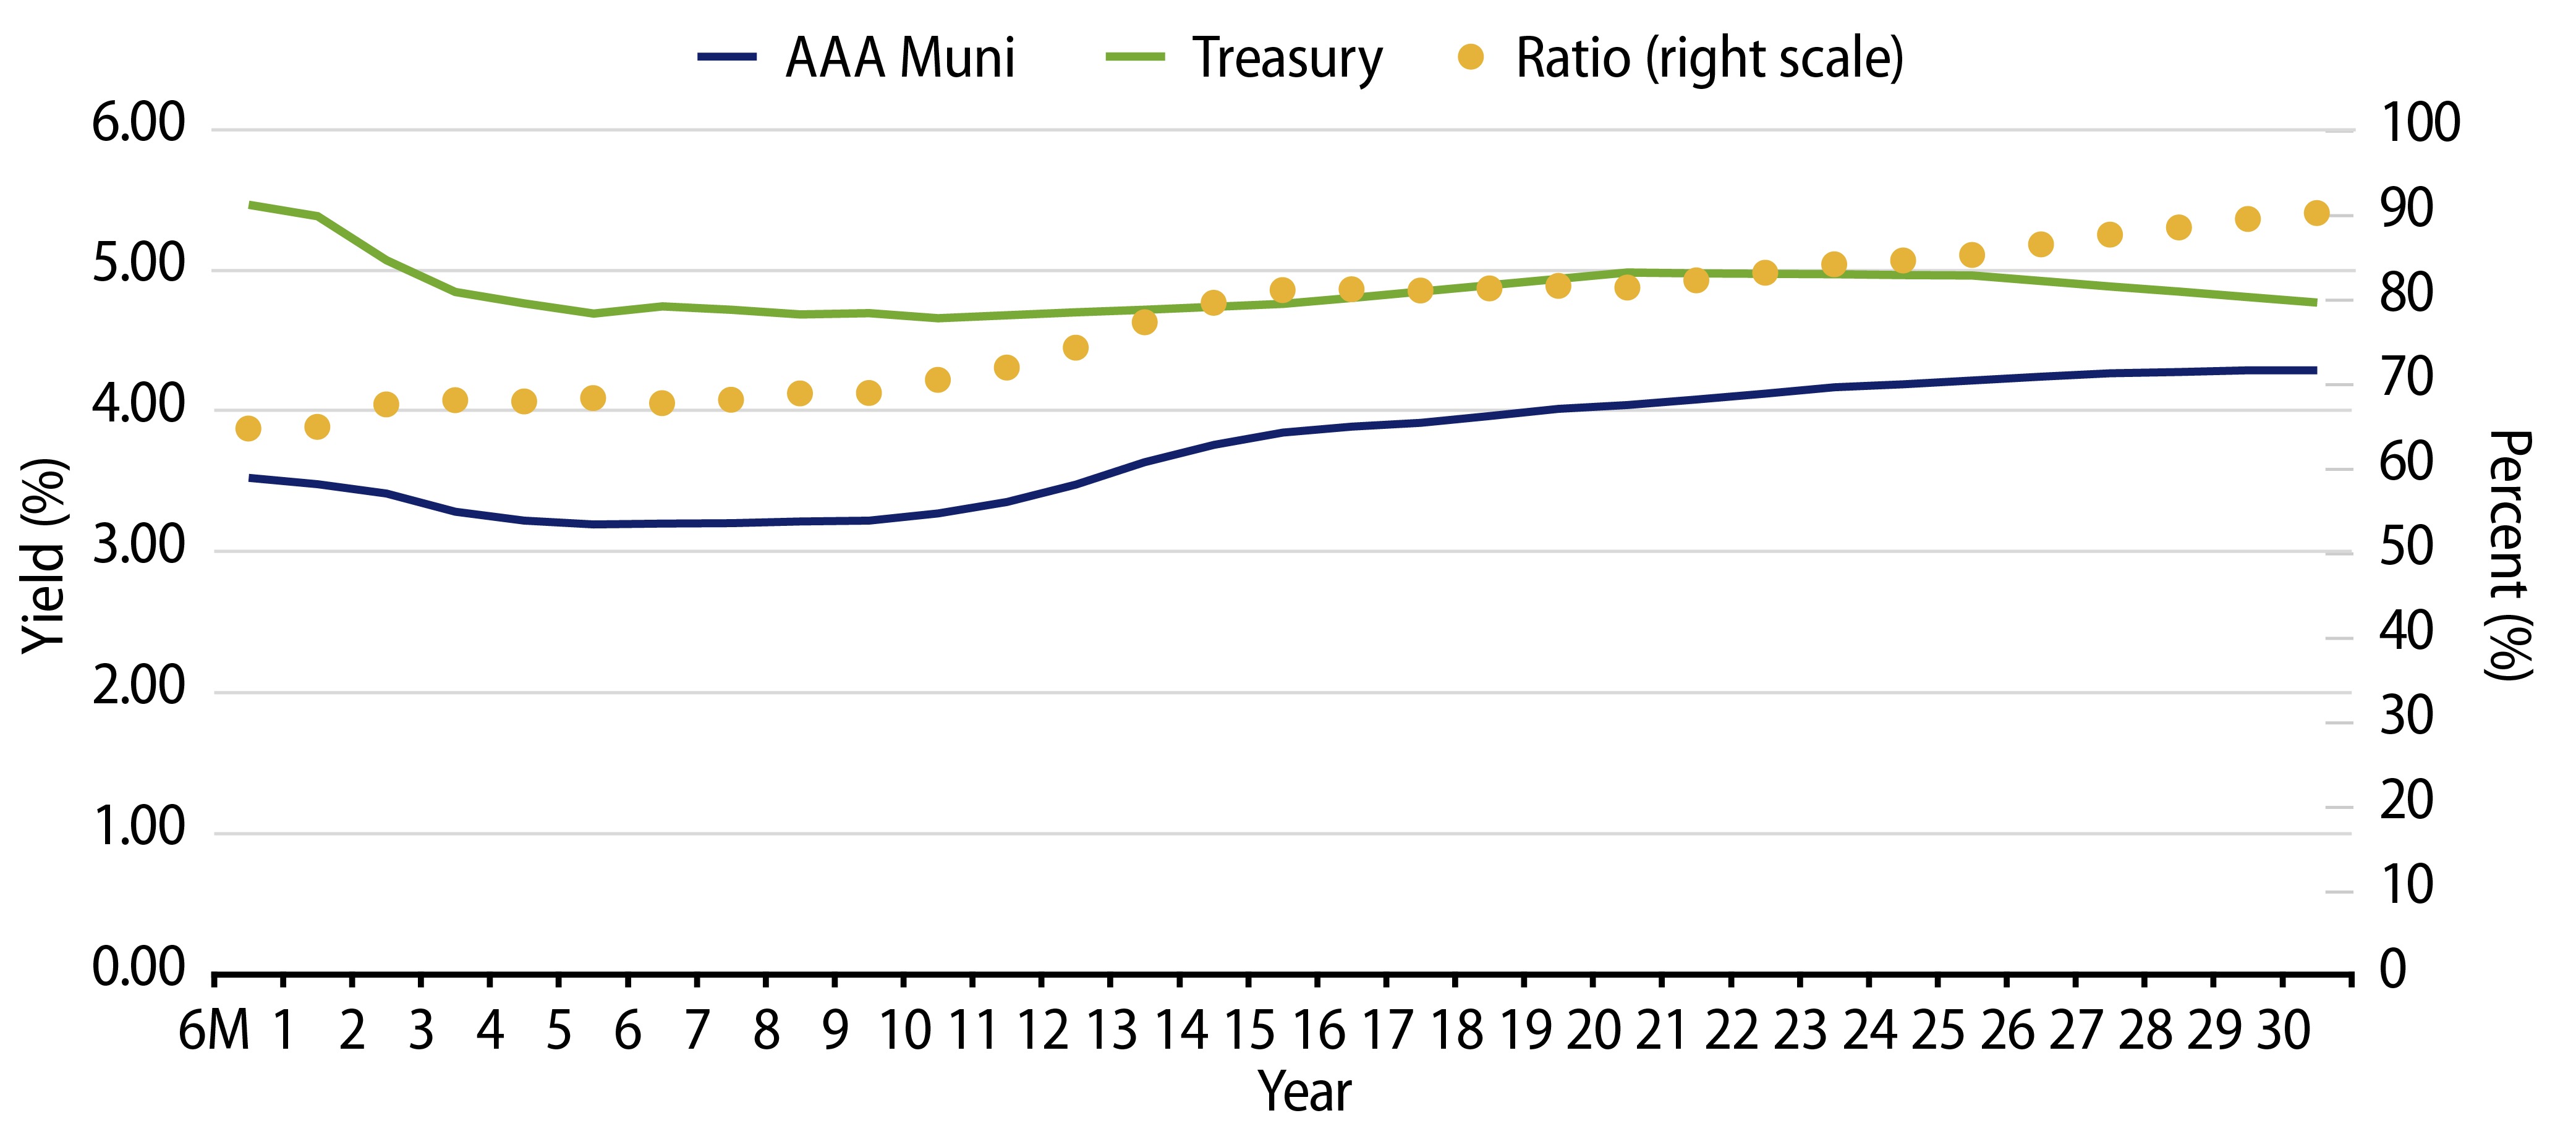 Explore AAA Municipal vs. Treasury Yield Curves